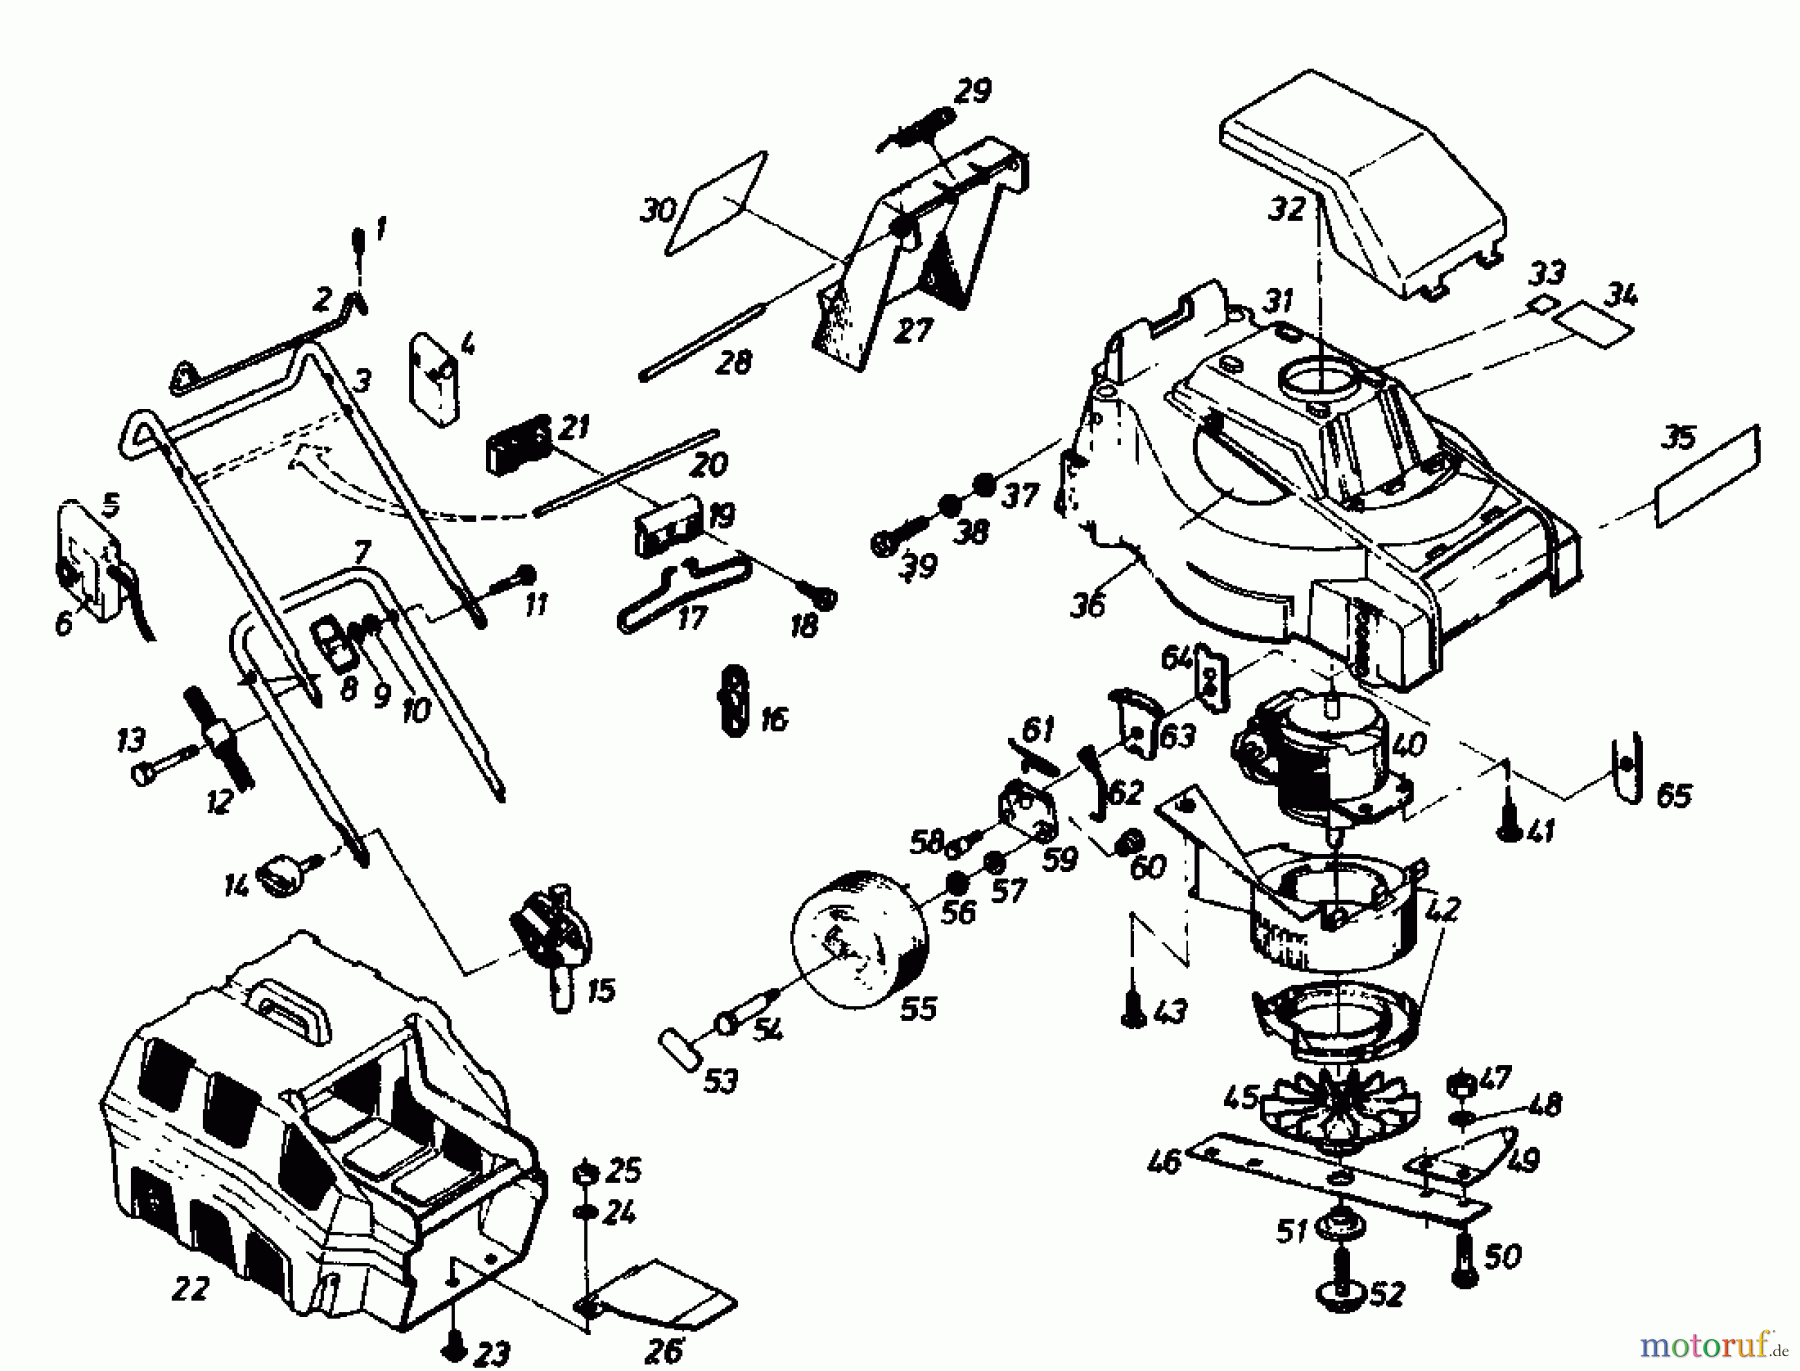  Gutbrod Electric mower HE 47 LS 02650.01  (1989) Basic machine